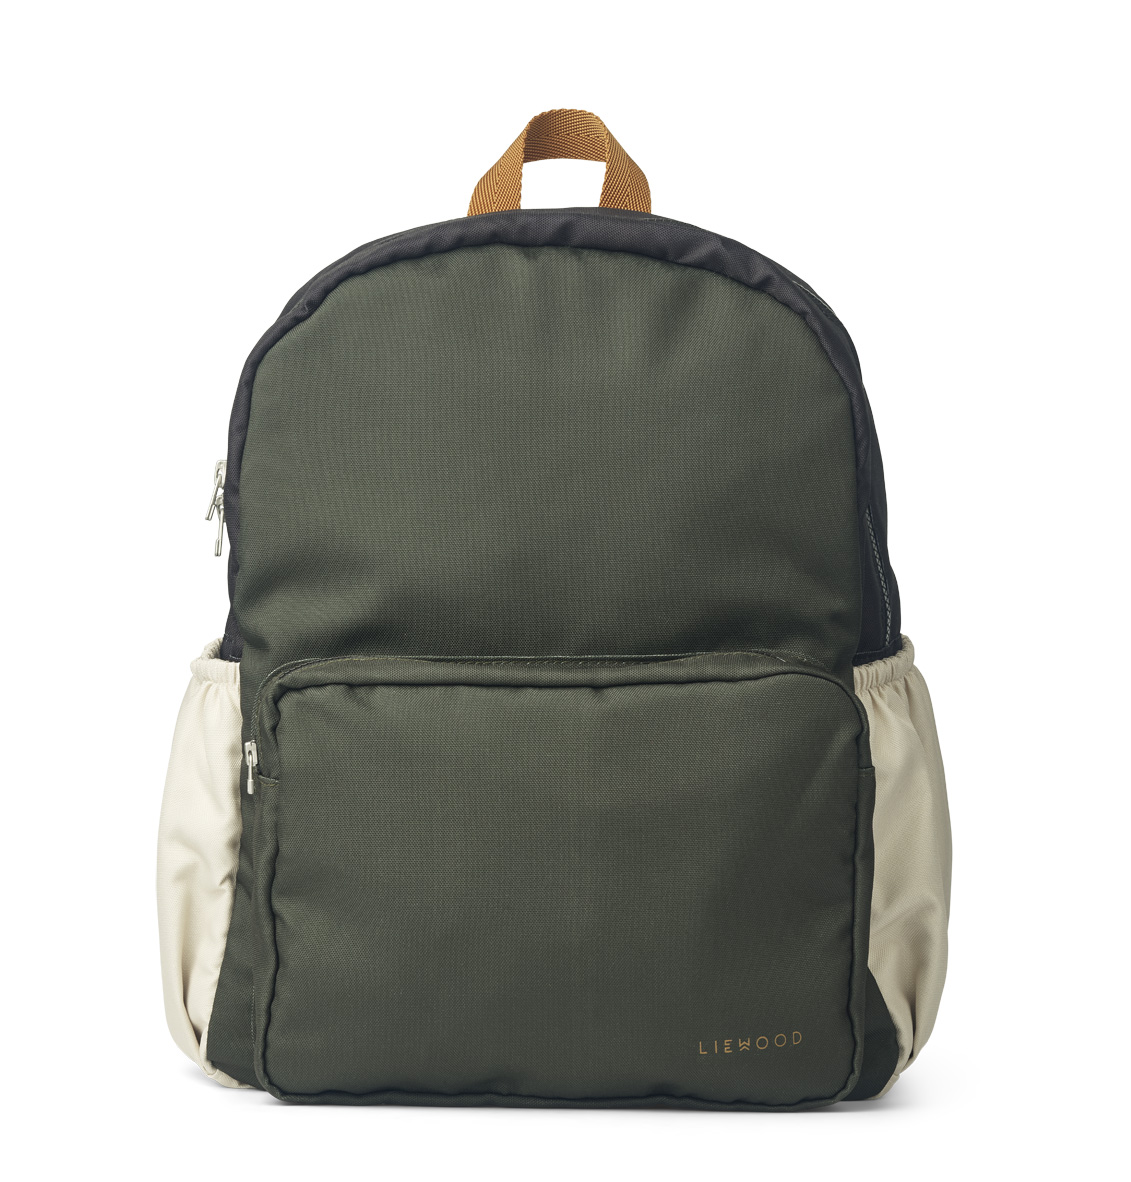 James school backpack - Hunter green multi mix